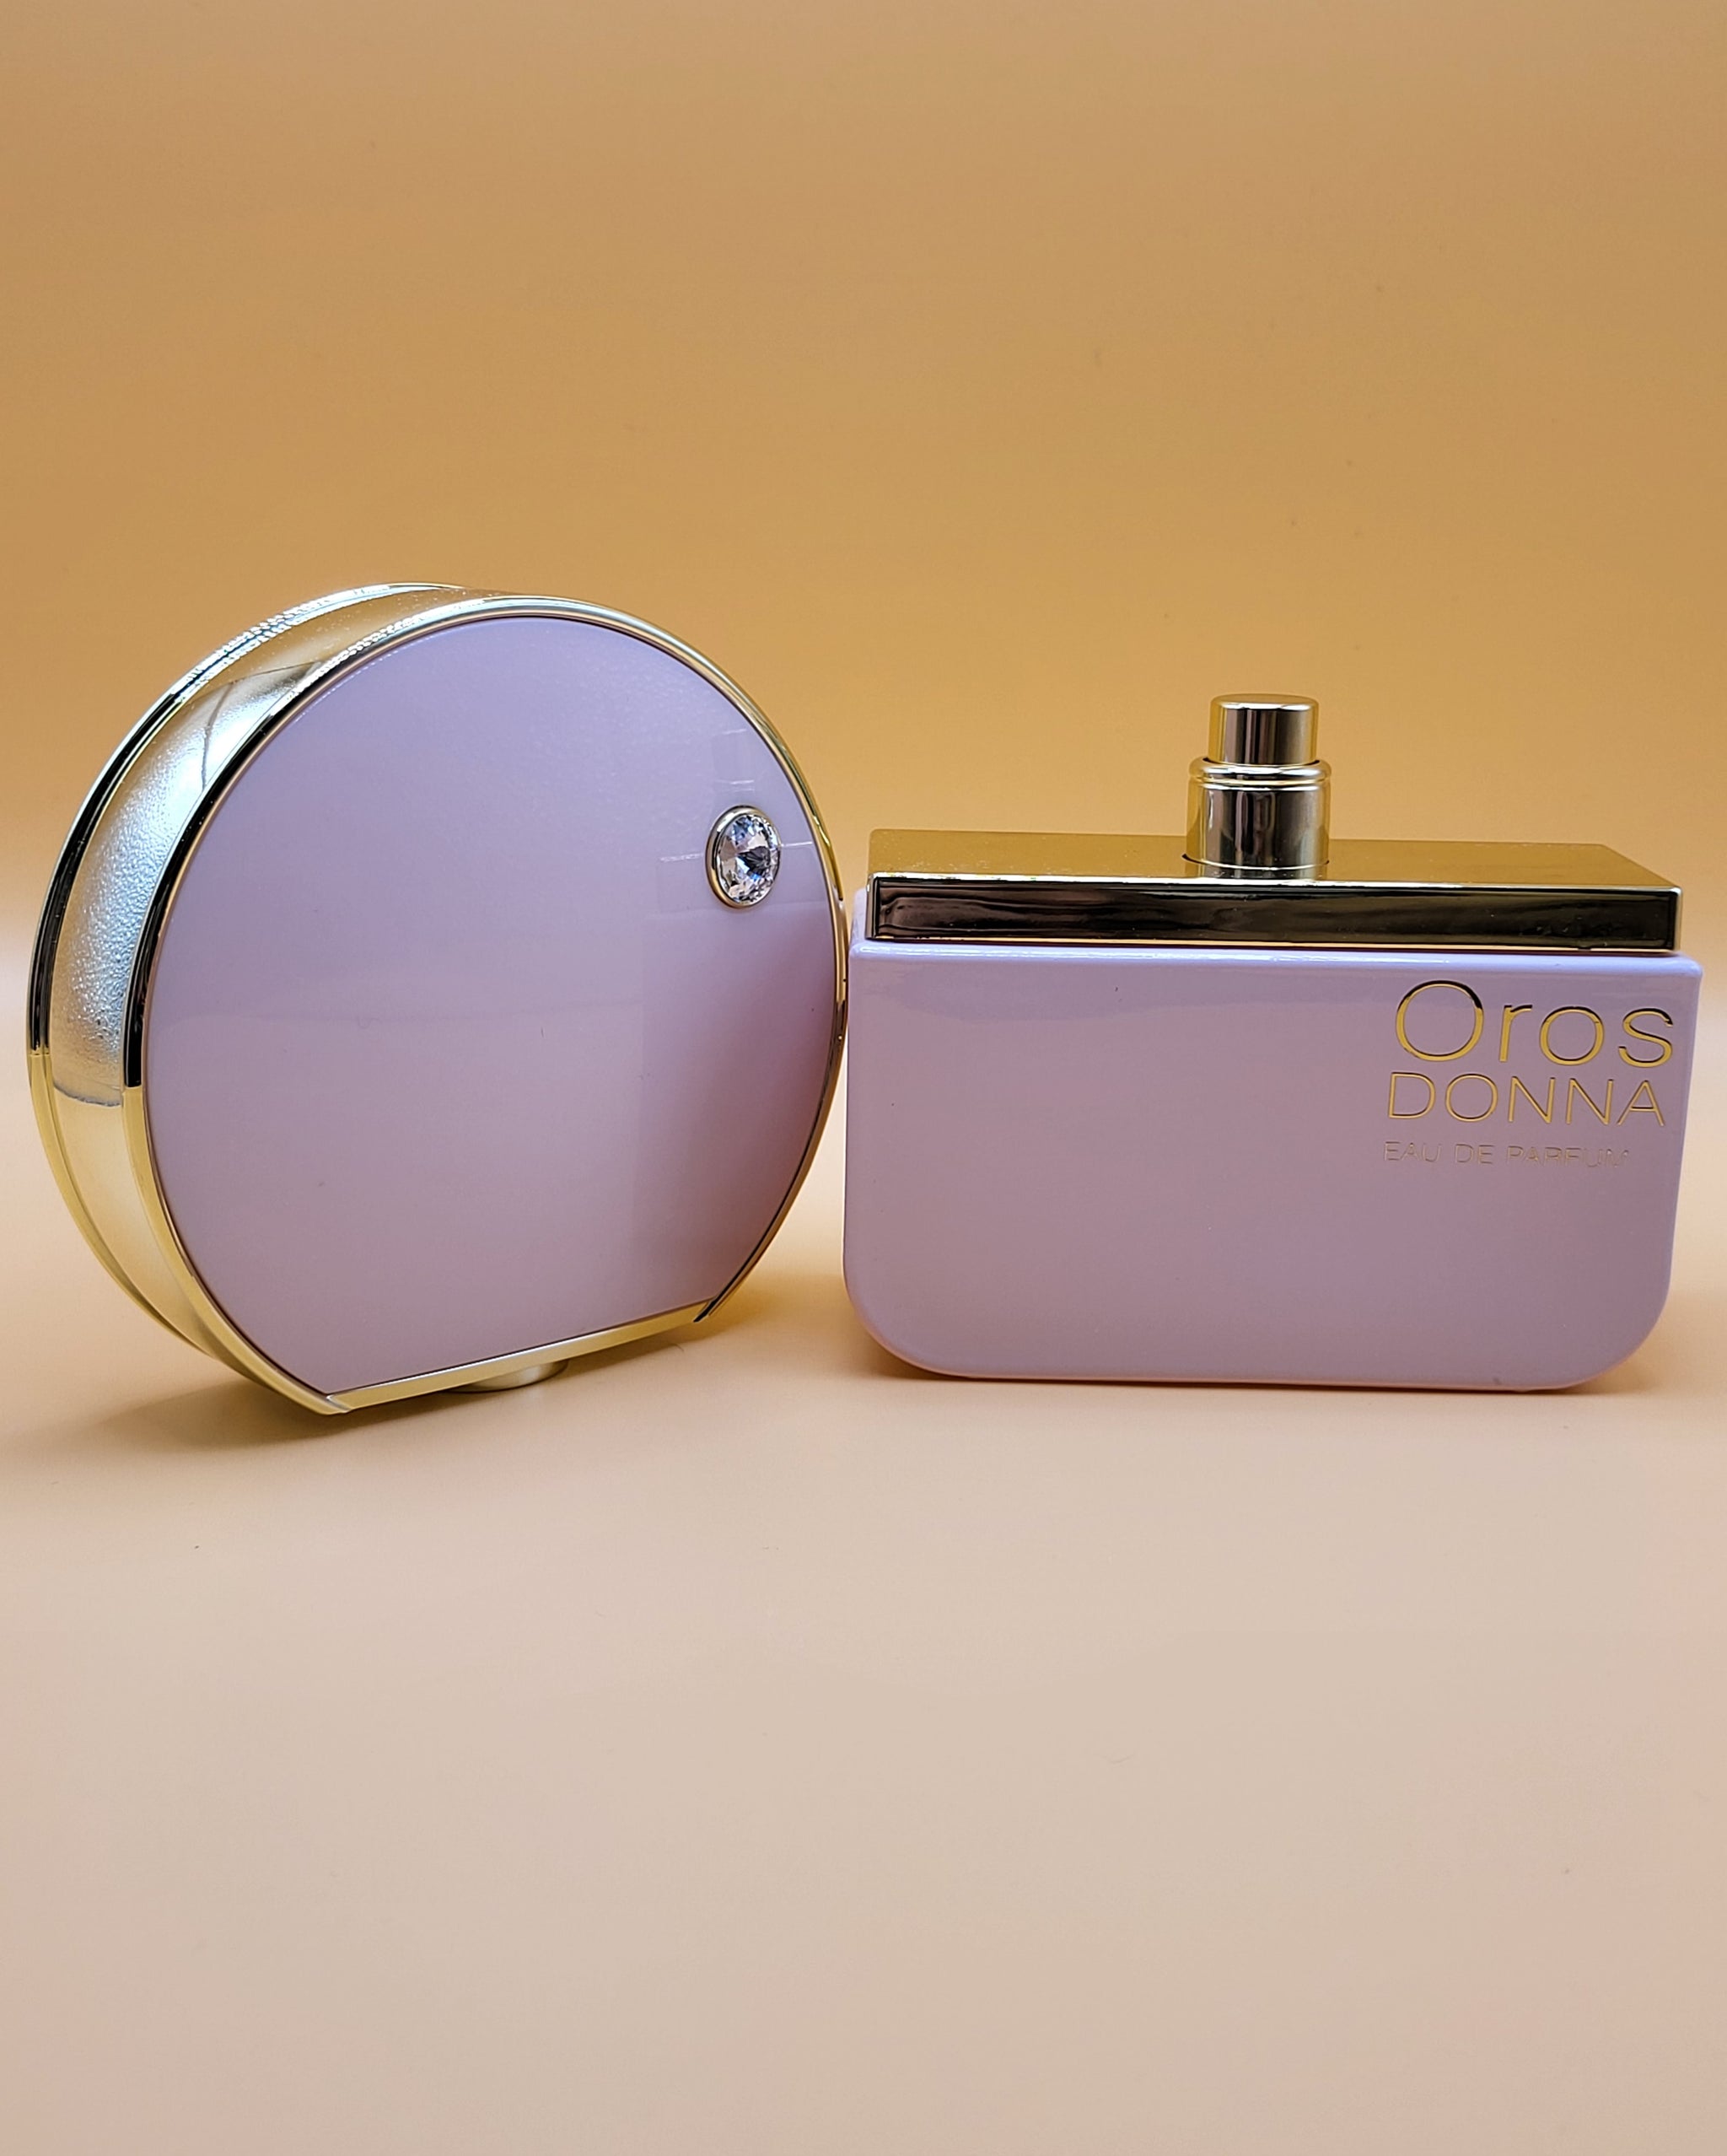 Oros Donna by Armaf for Women 3.4 Oz / 100ml Eau de Parfum Made with Crystals from Swarovski